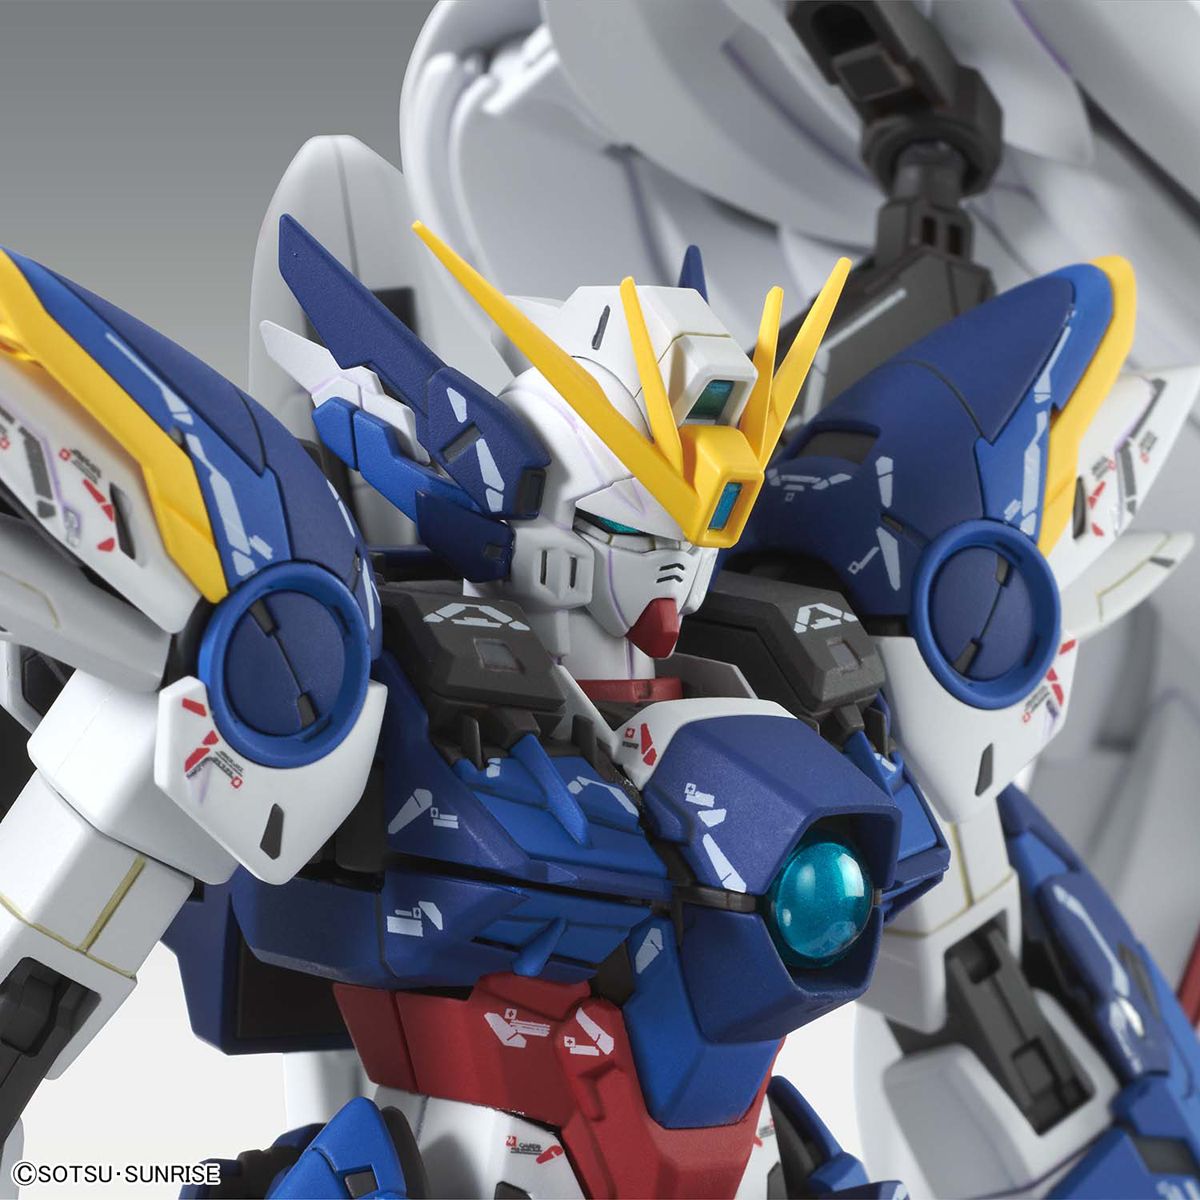 MG 1/100 Wing Gundam Zero Custom EW Ver. Ka 2020 Ver